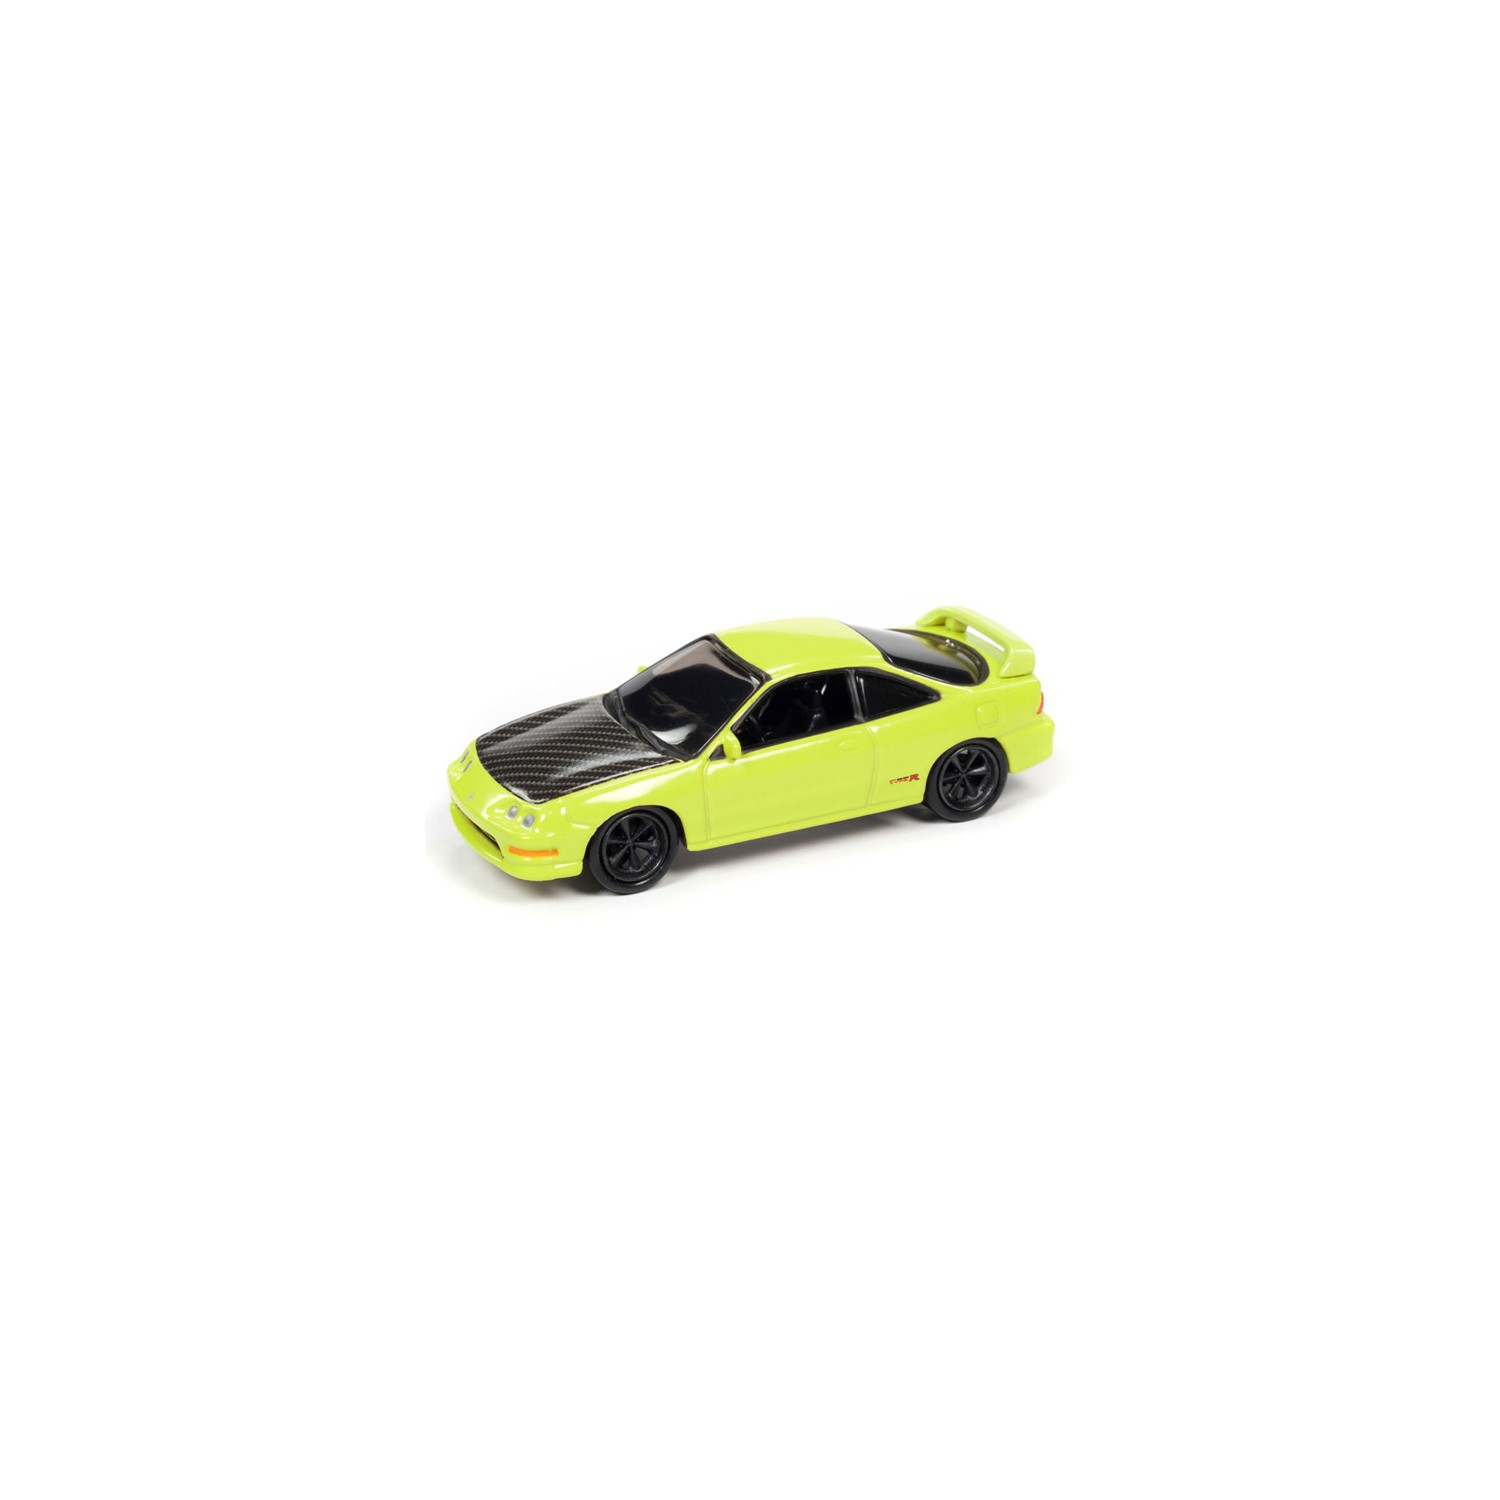 1/64 Scale Diecast Metal Car Model Toys Honda Integra Type-r Dc2